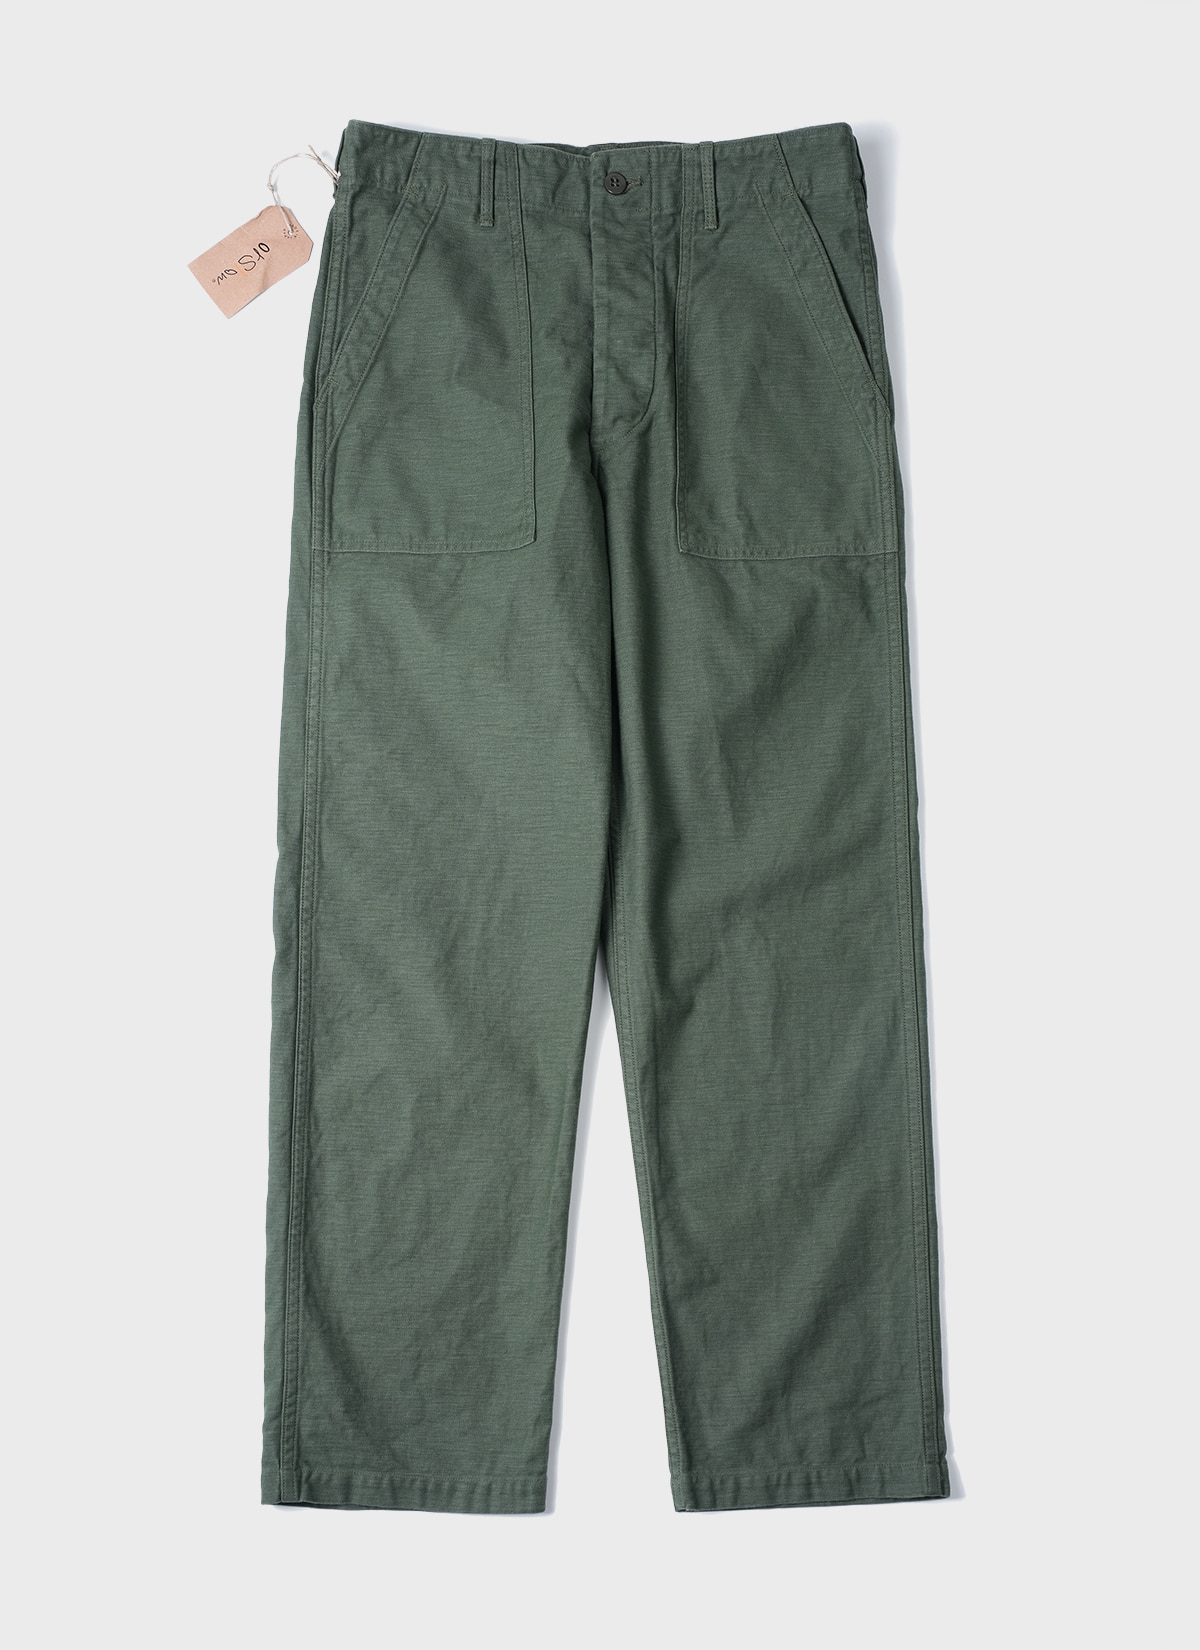 US Army Fatigue Pants Original Fit